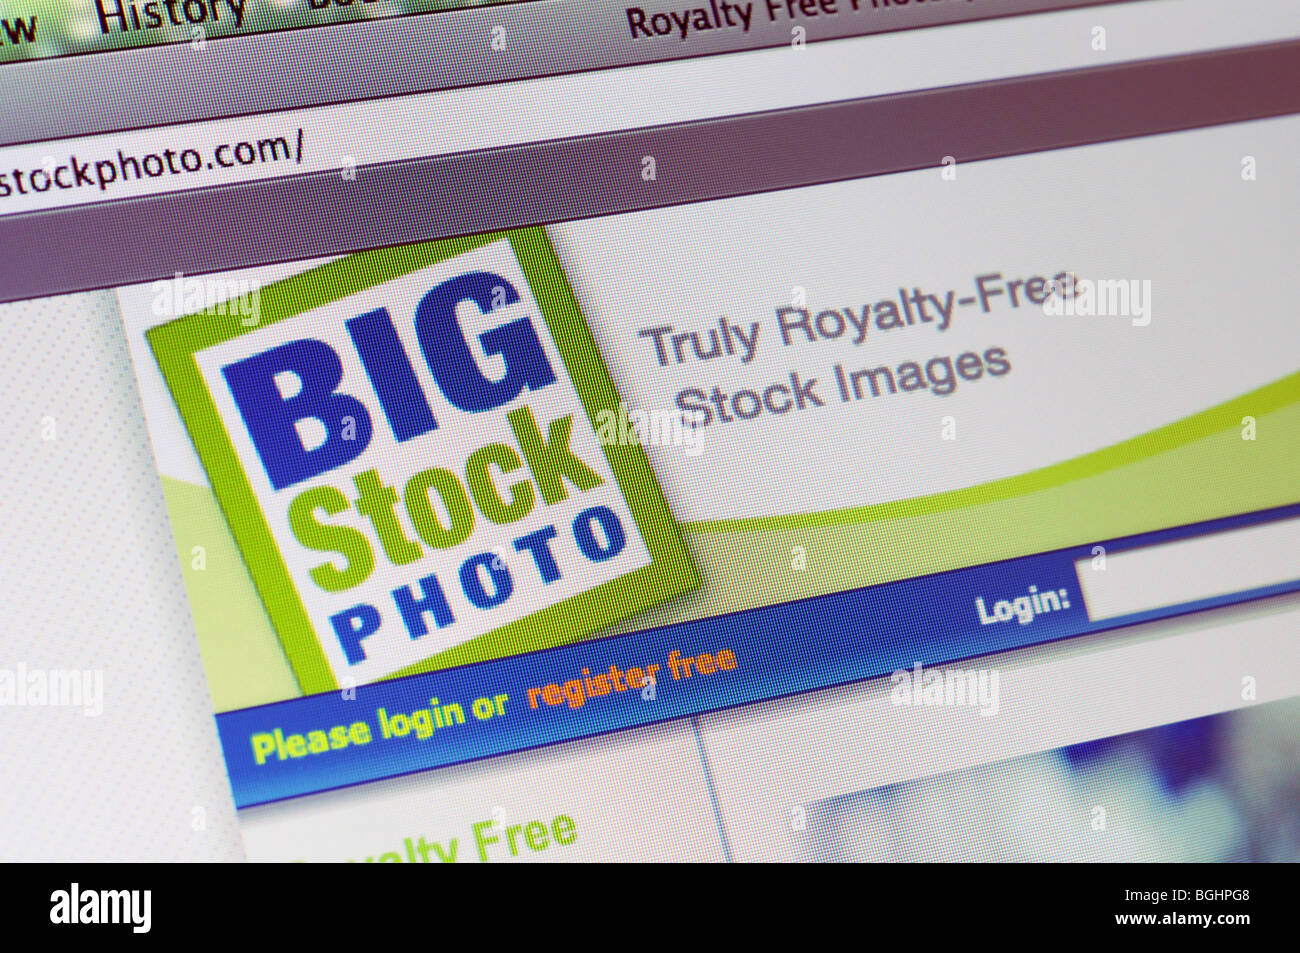 BigStock stock photo agency sito web Foto Stock